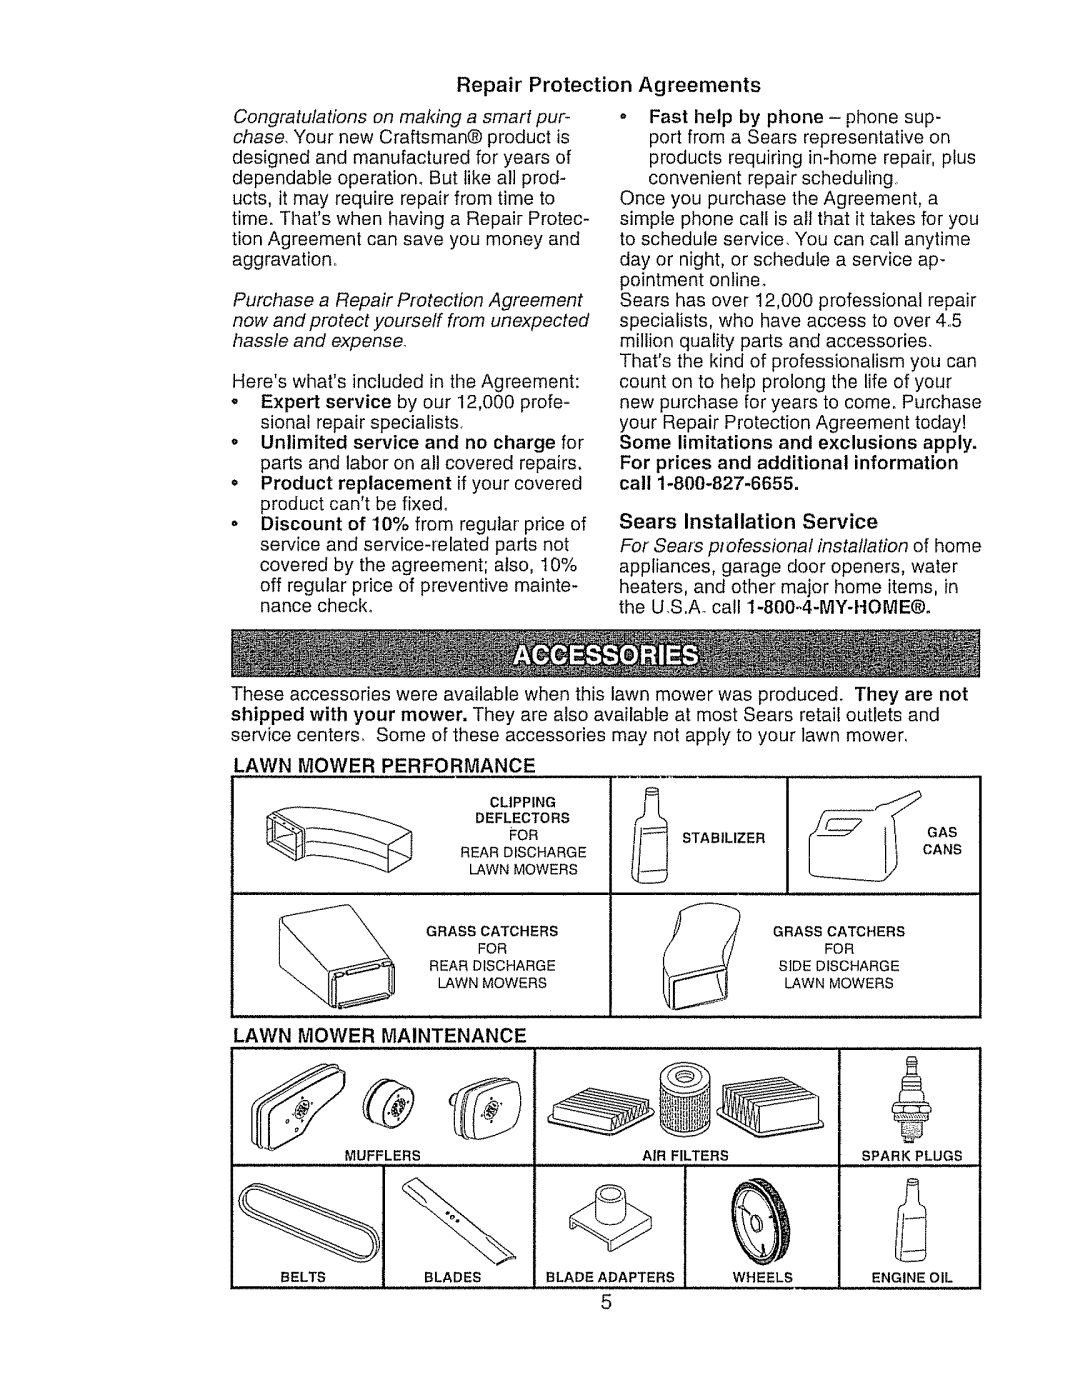 Craftsman 917.388191 manual Repair Protection Agreements, Lawn Mower Maintenance 